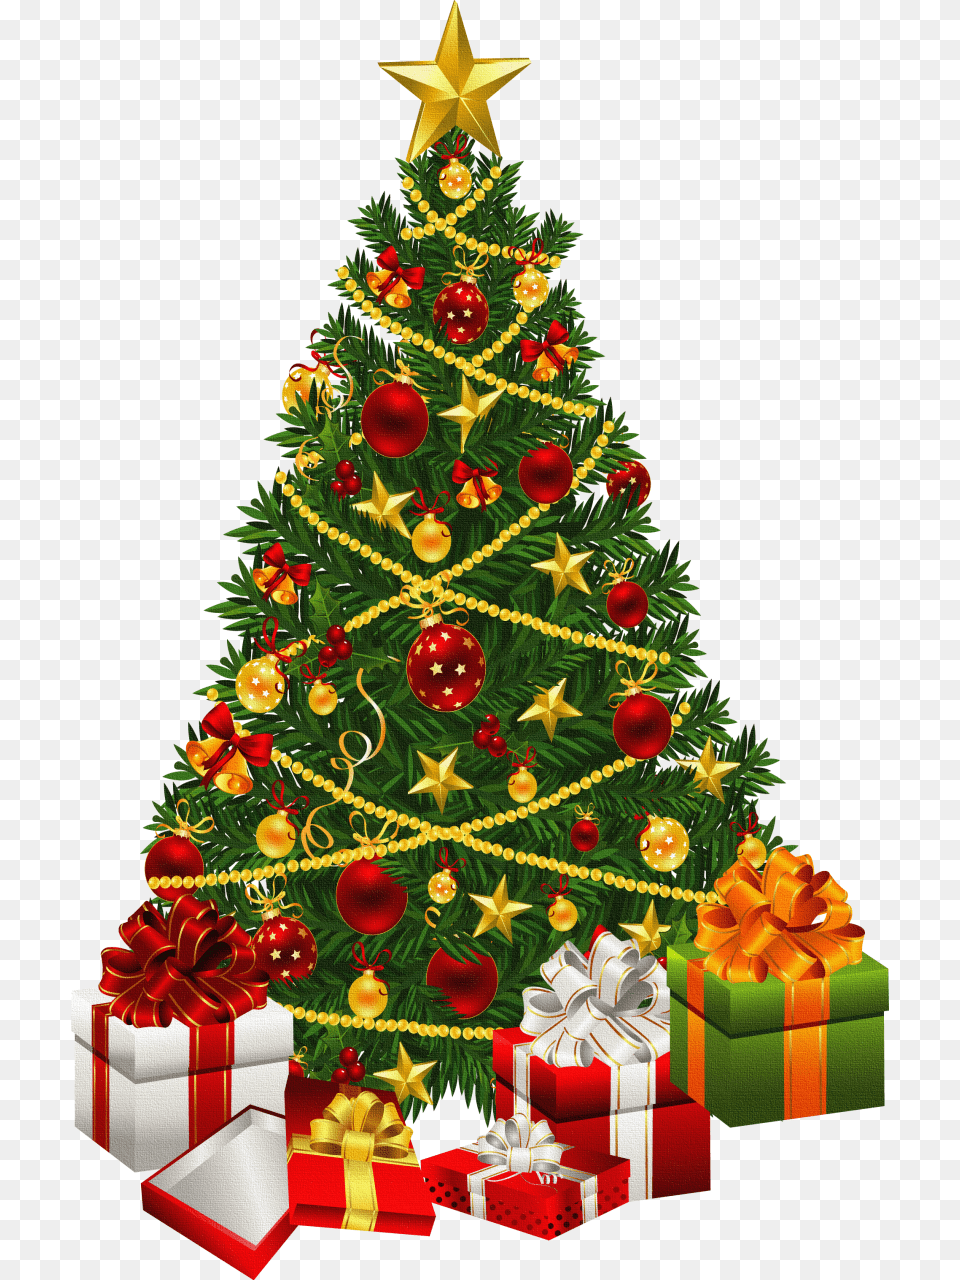 Download Christmas Tree Clipart Christmas Tree Hd, Plant, Christmas Decorations, Festival, Christmas Tree Free Png